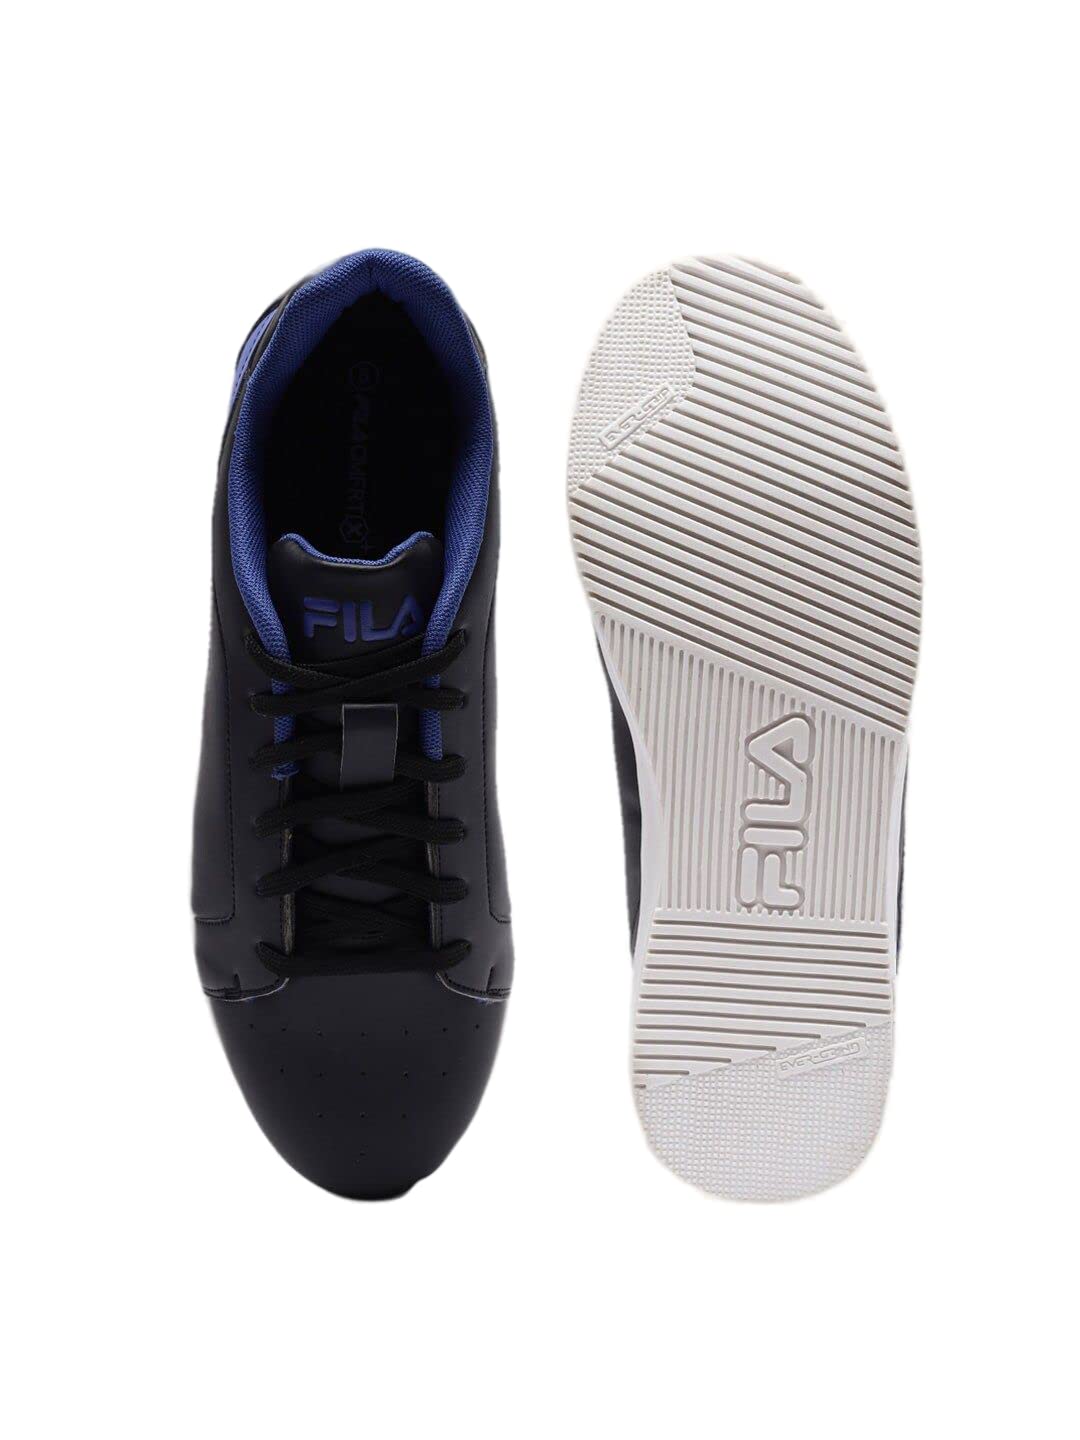 Fila Men's Koroch BLK/DTR BLU Casual Shoes- Black 